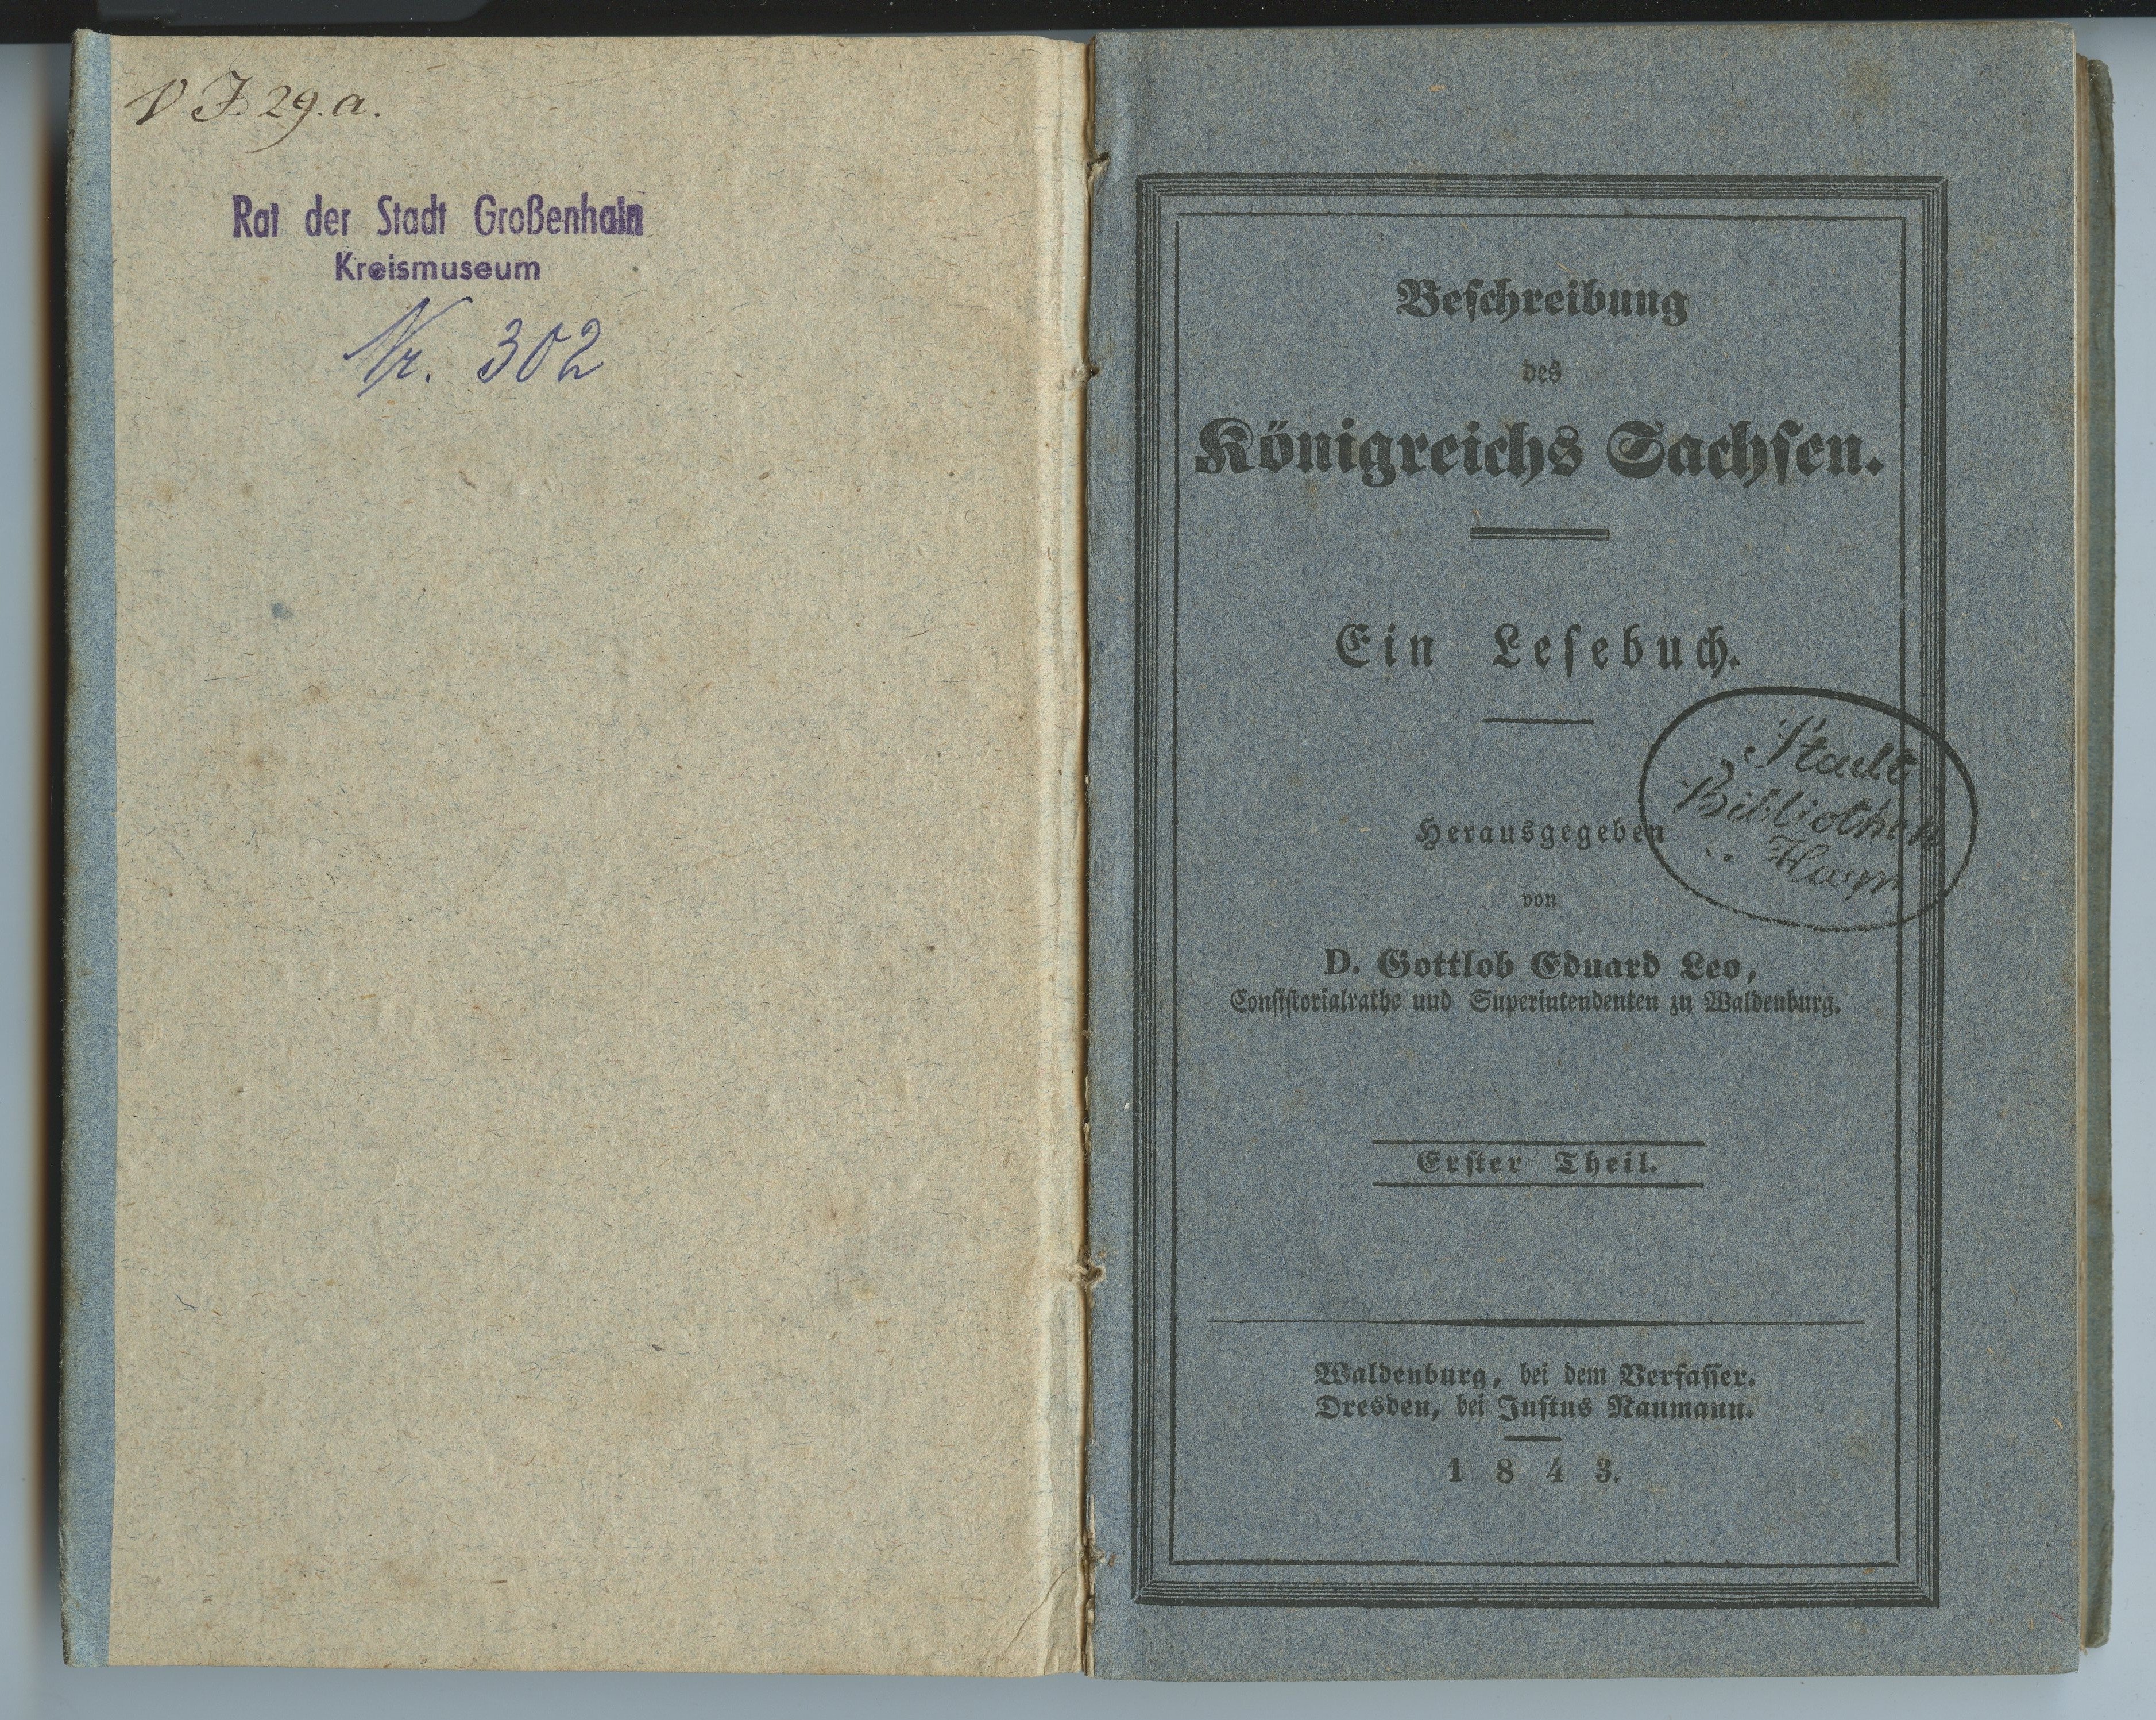 Leo, Gottlob Eduard (Hrsg.): Beschreibung des Königreichs Sachsen. Teil 1, 1843 (Museum Alte Lateinschule CC BY-NC-SA)